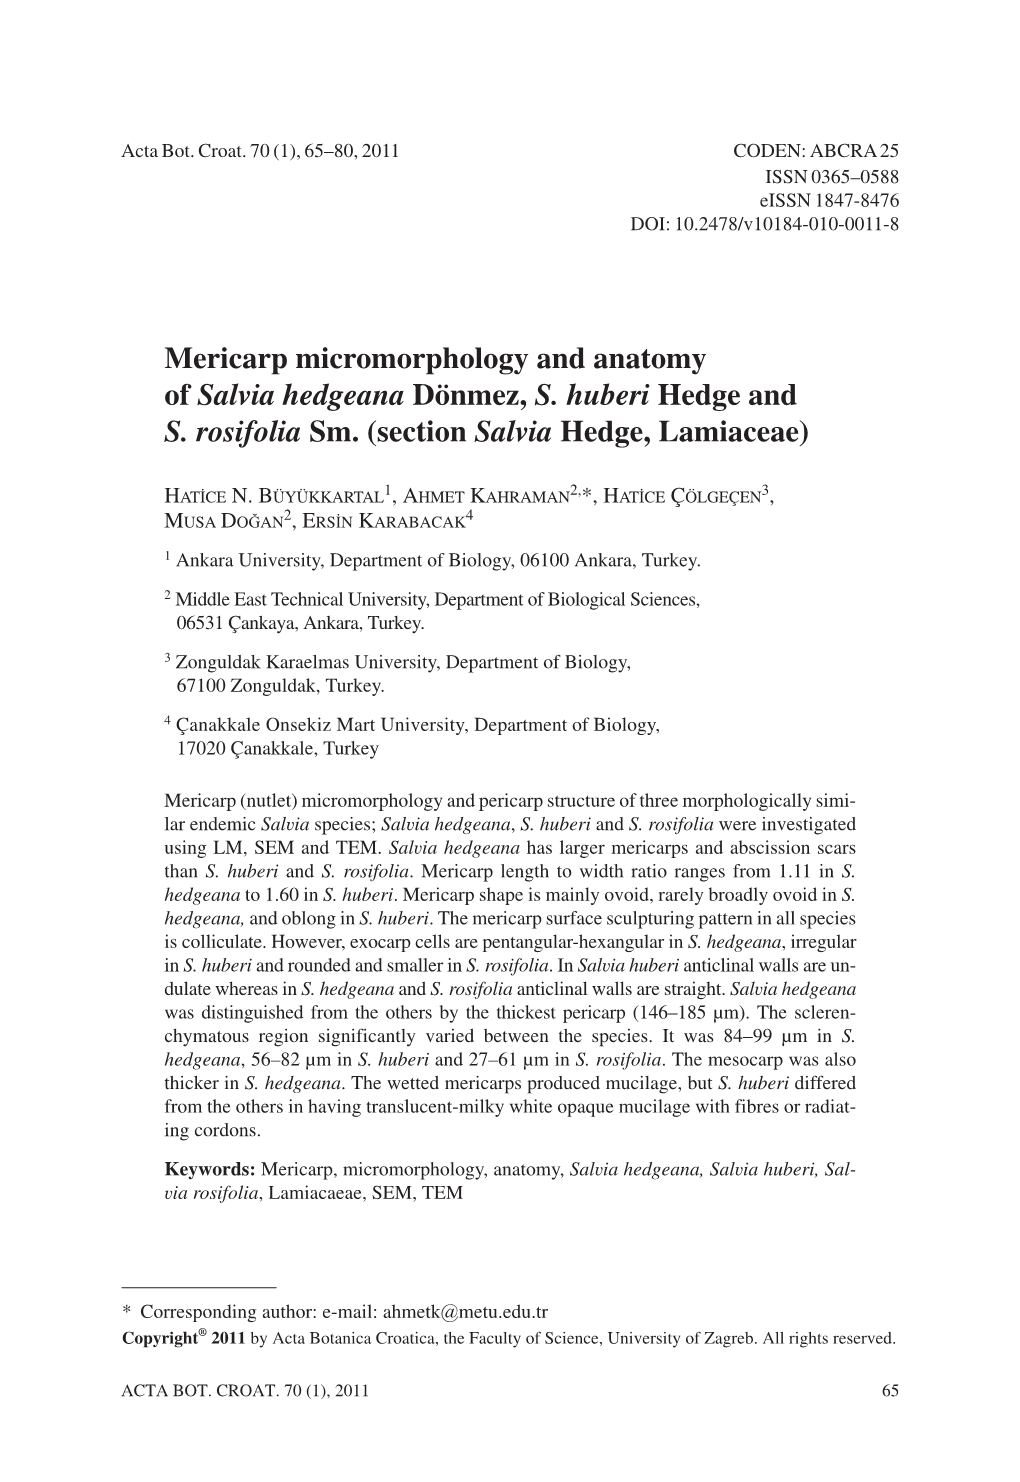 Mericarp Micromorphology and Anatomy of Salvia Hedgeana Dönmez, S. Huberi Hedge and S. Rosifolia Sm